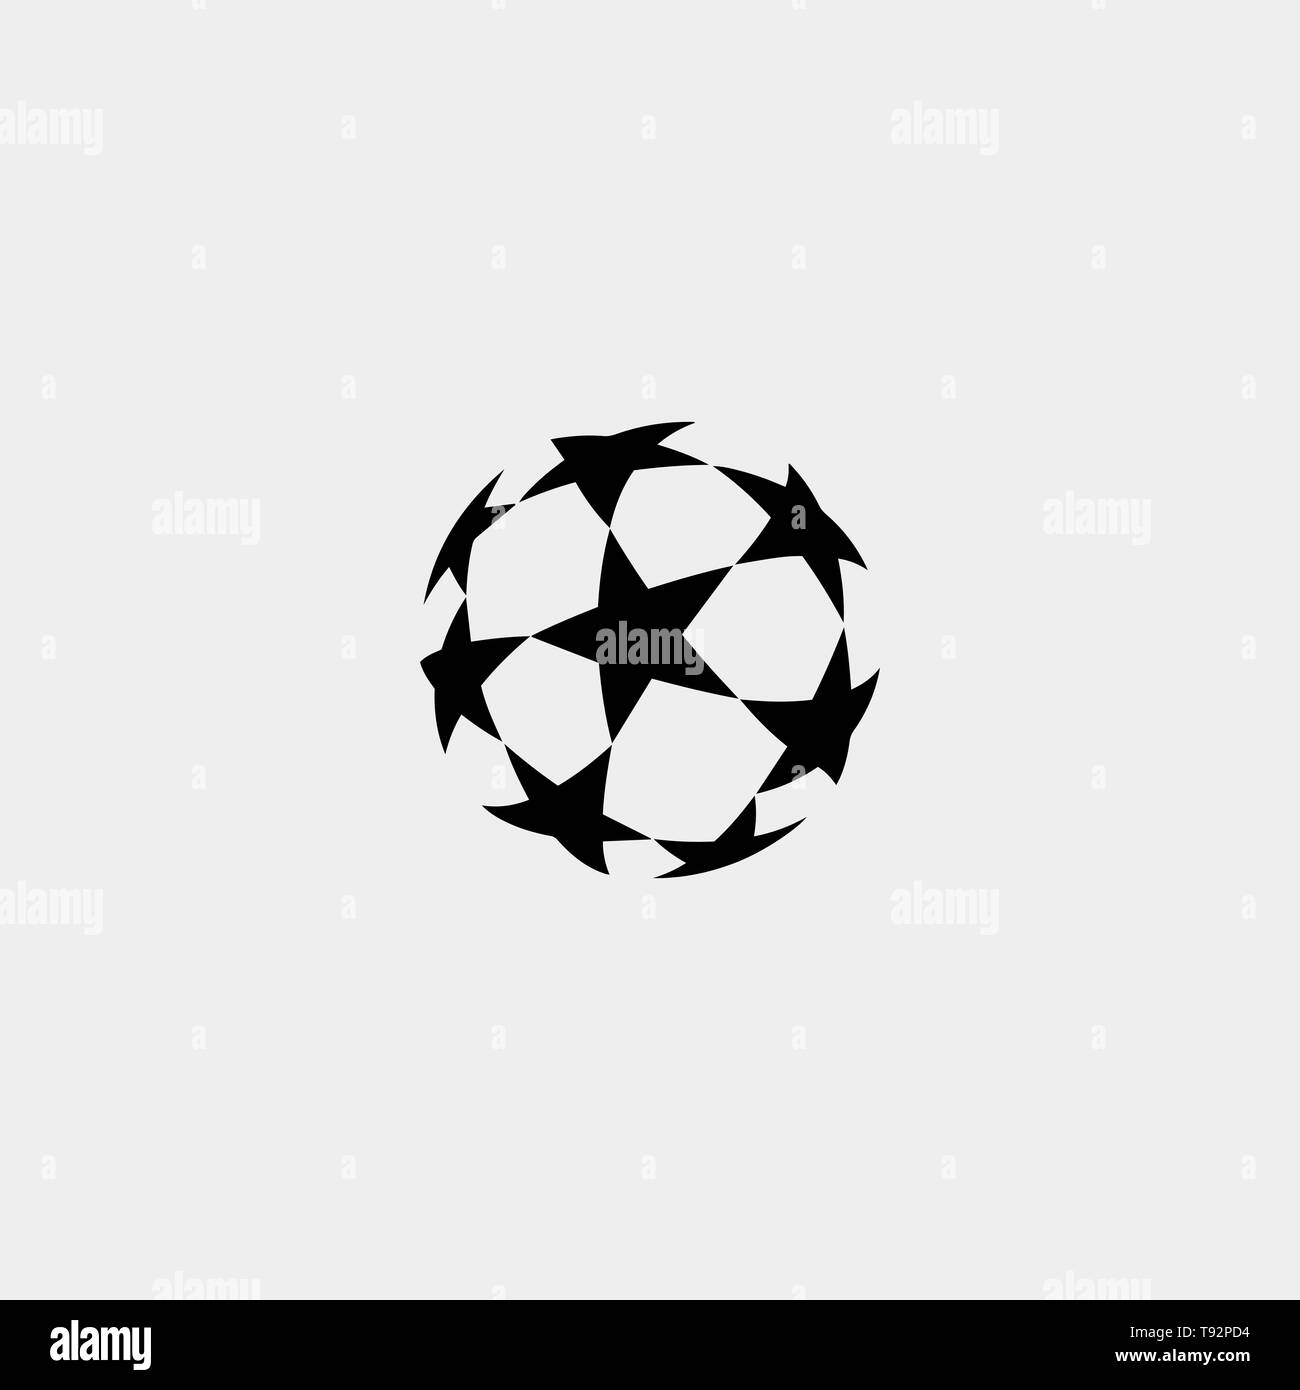 champions league europe official logo vector illustration - vector ...